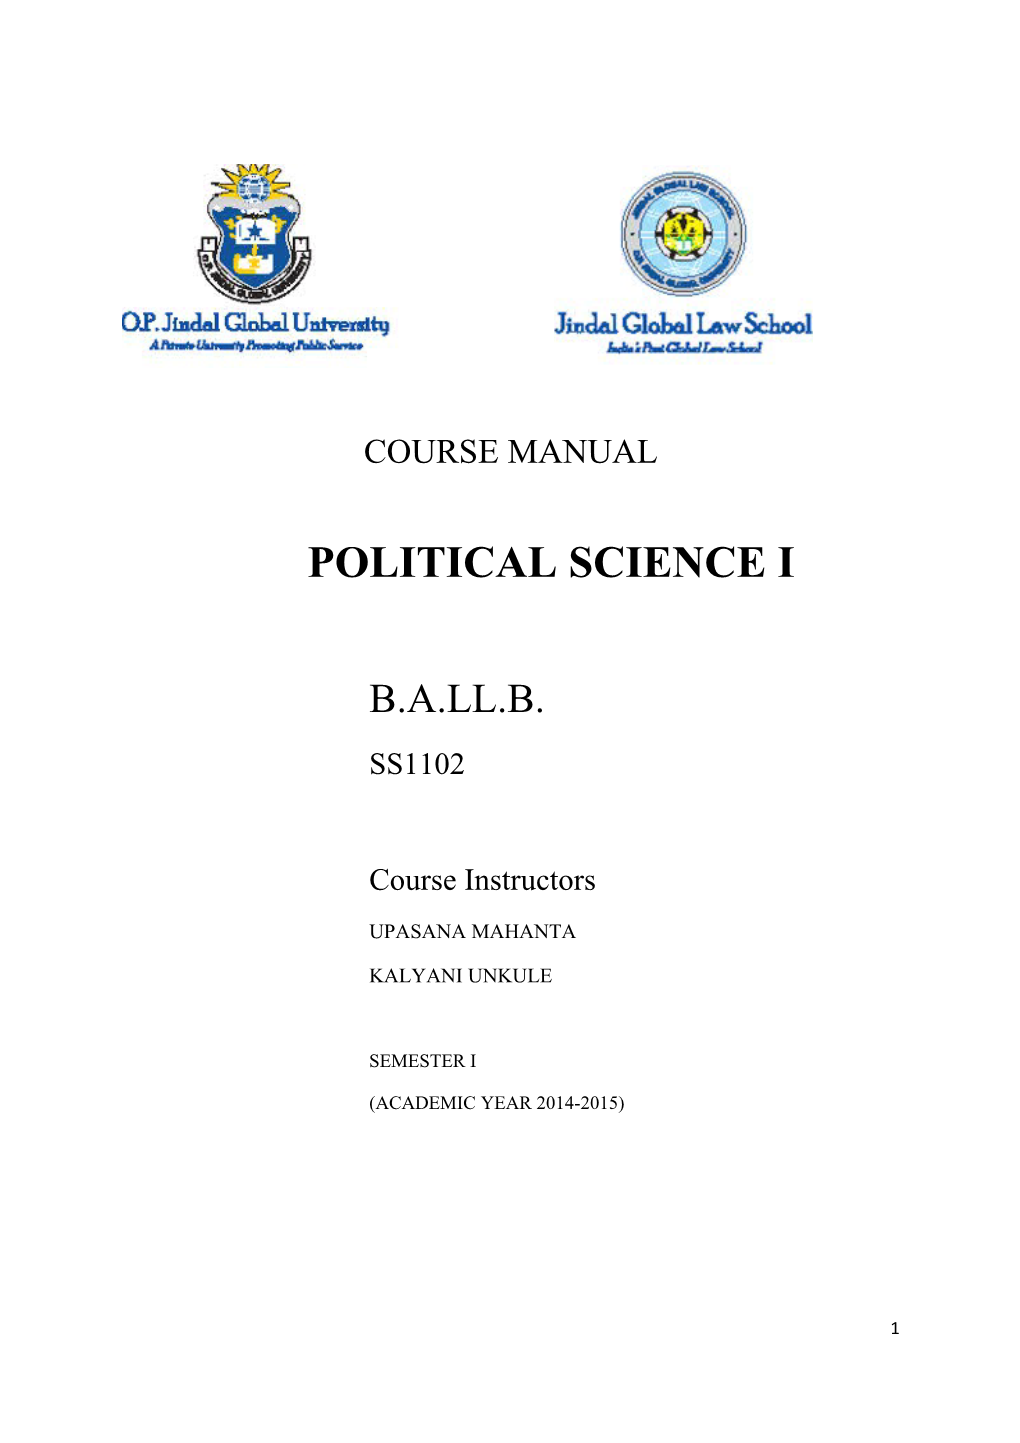 Political Science I